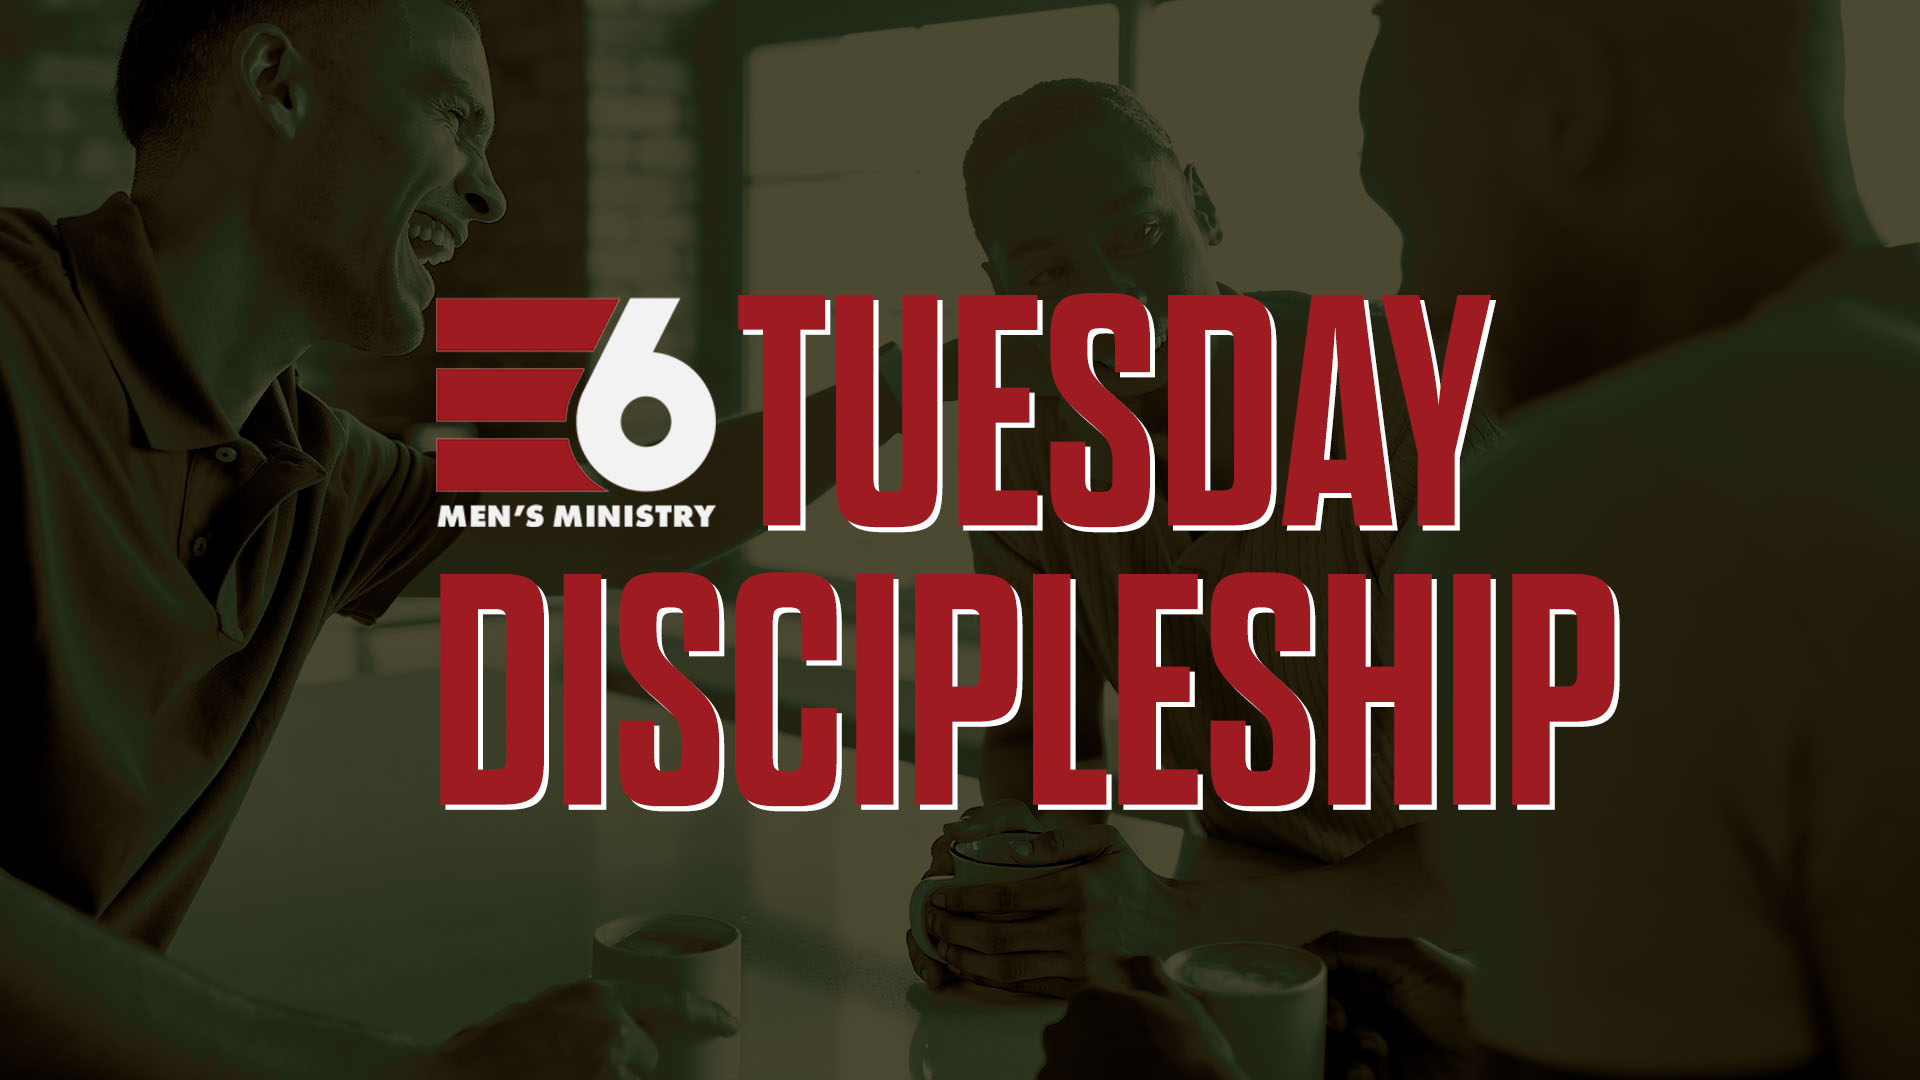 Tuesday Discipleship Brand